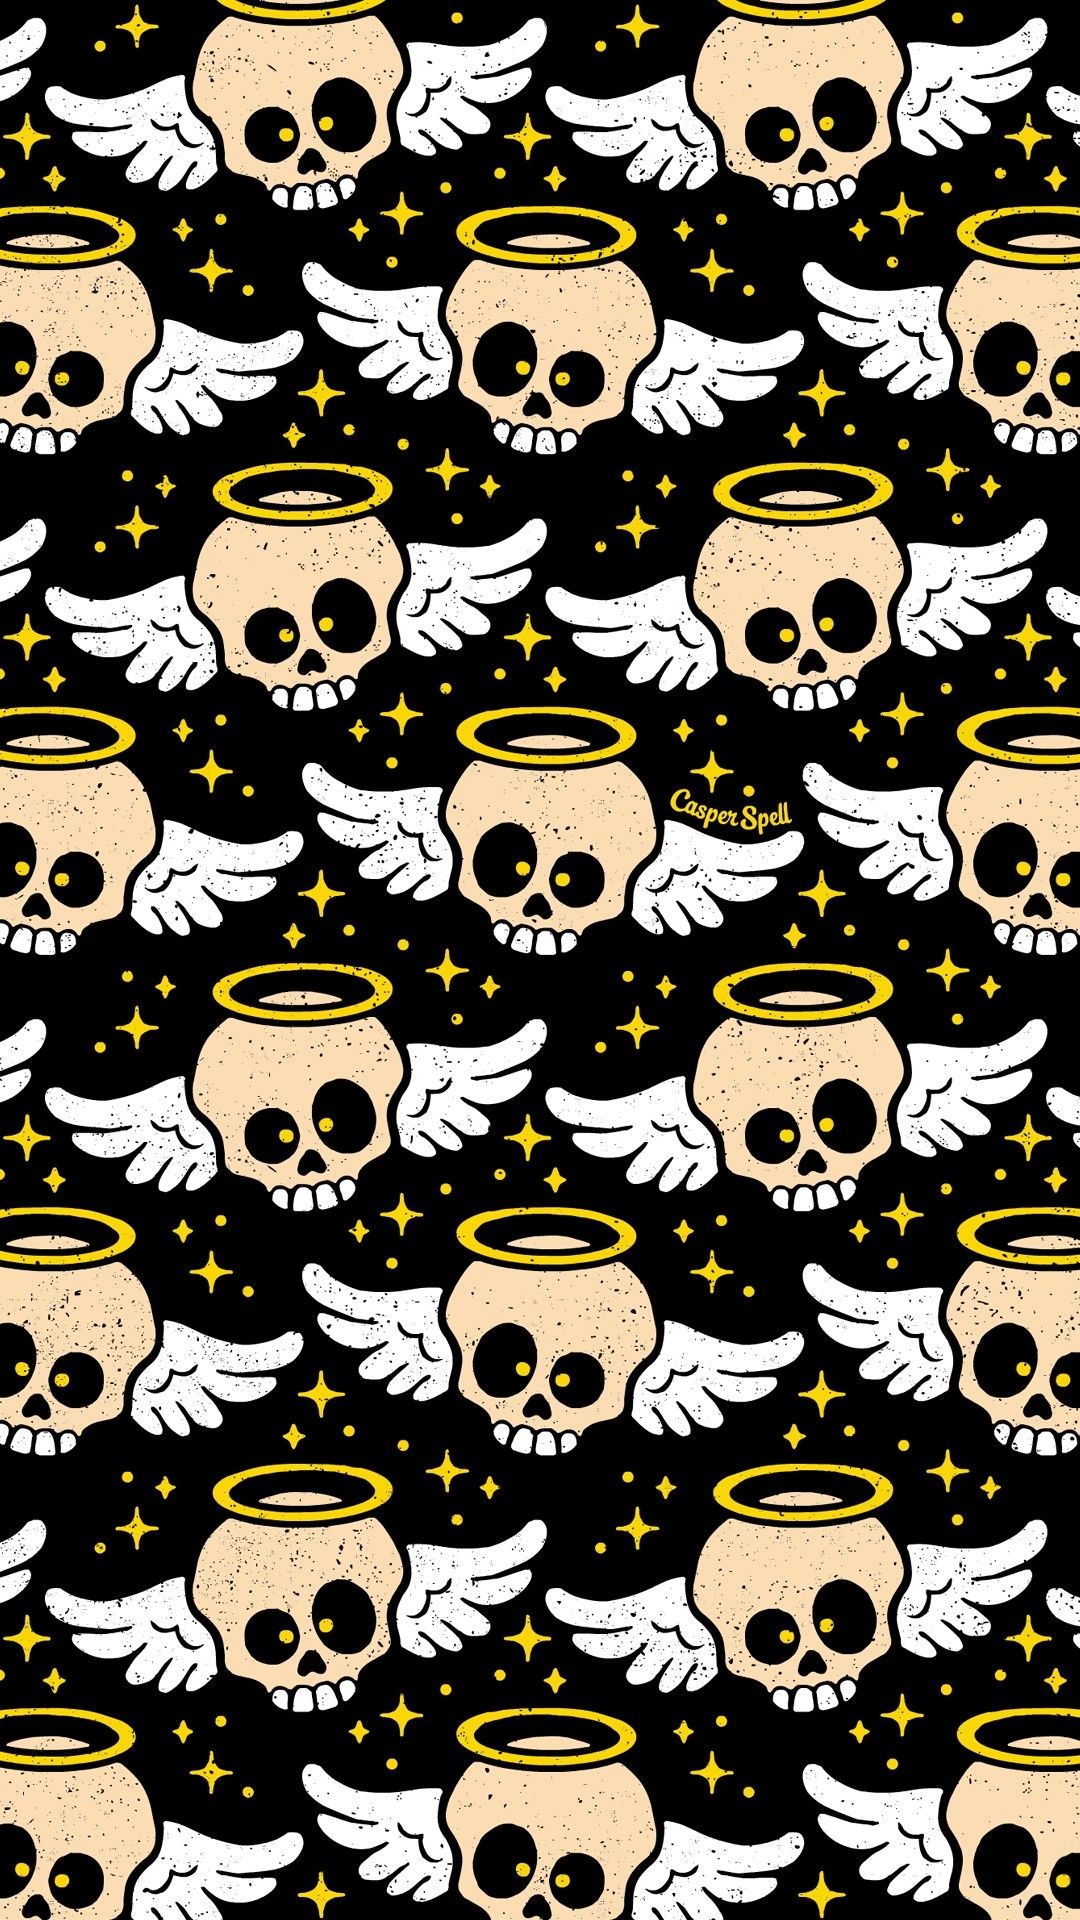 1080x1920, Angel Skull Skulls Macabre Spooky Creepy - Cute Scary Halloween Background - HD Wallpaper 